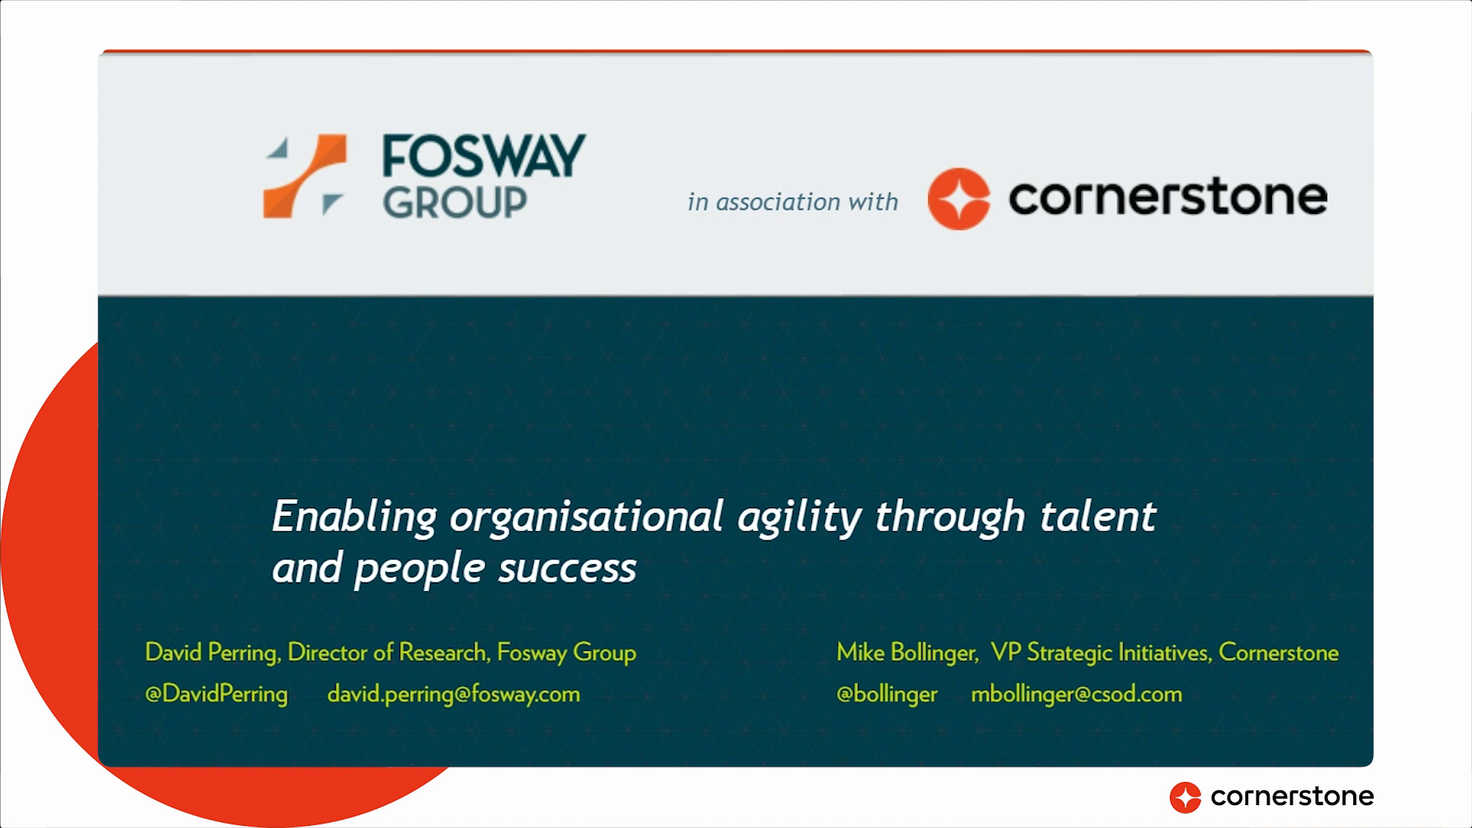 Enabling organizational agility through talent & people success